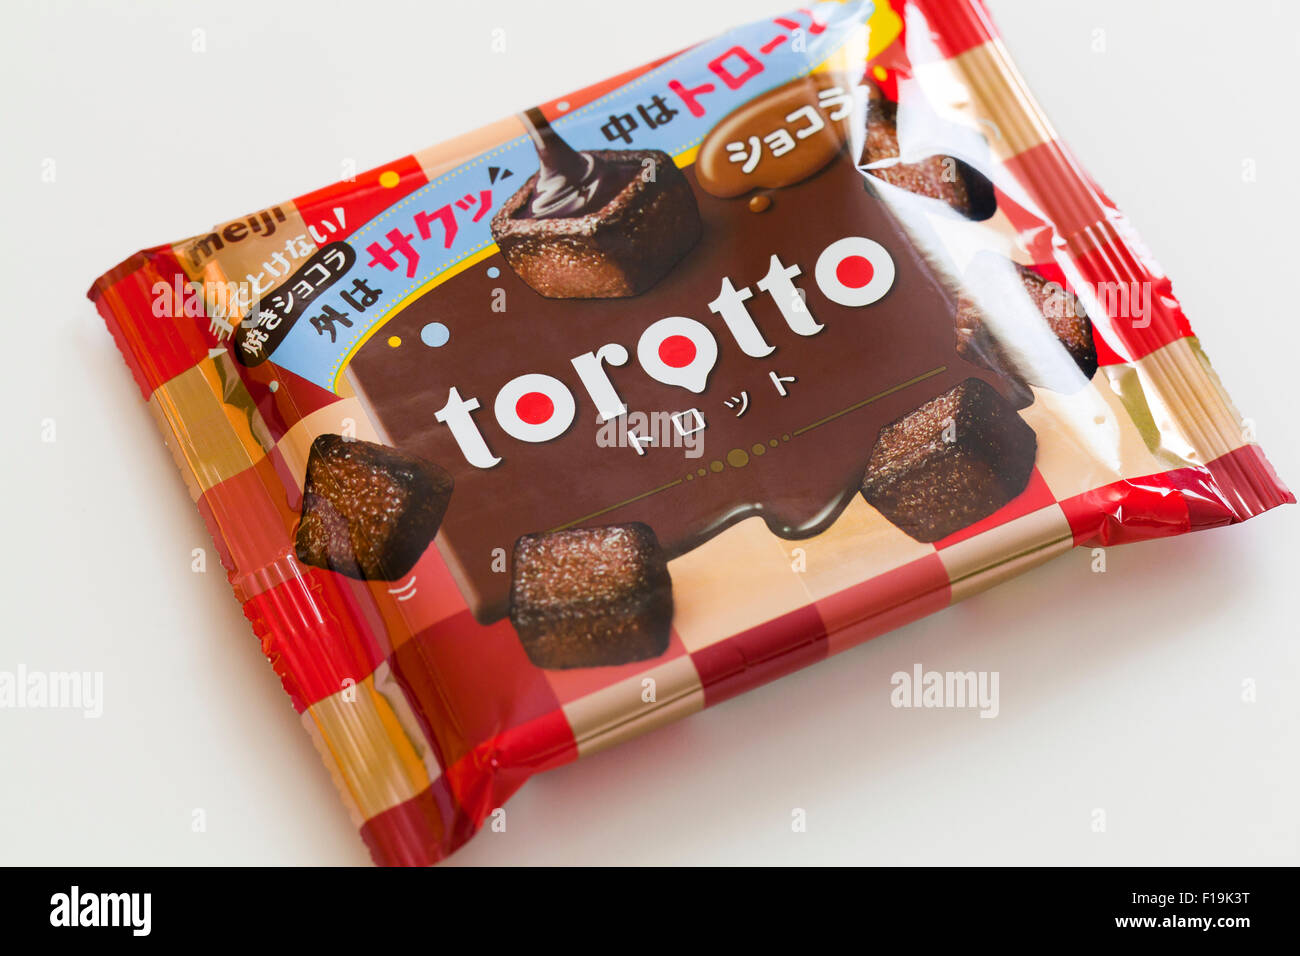 Meiji Torotto cremige Schokolade Paket Stockfoto